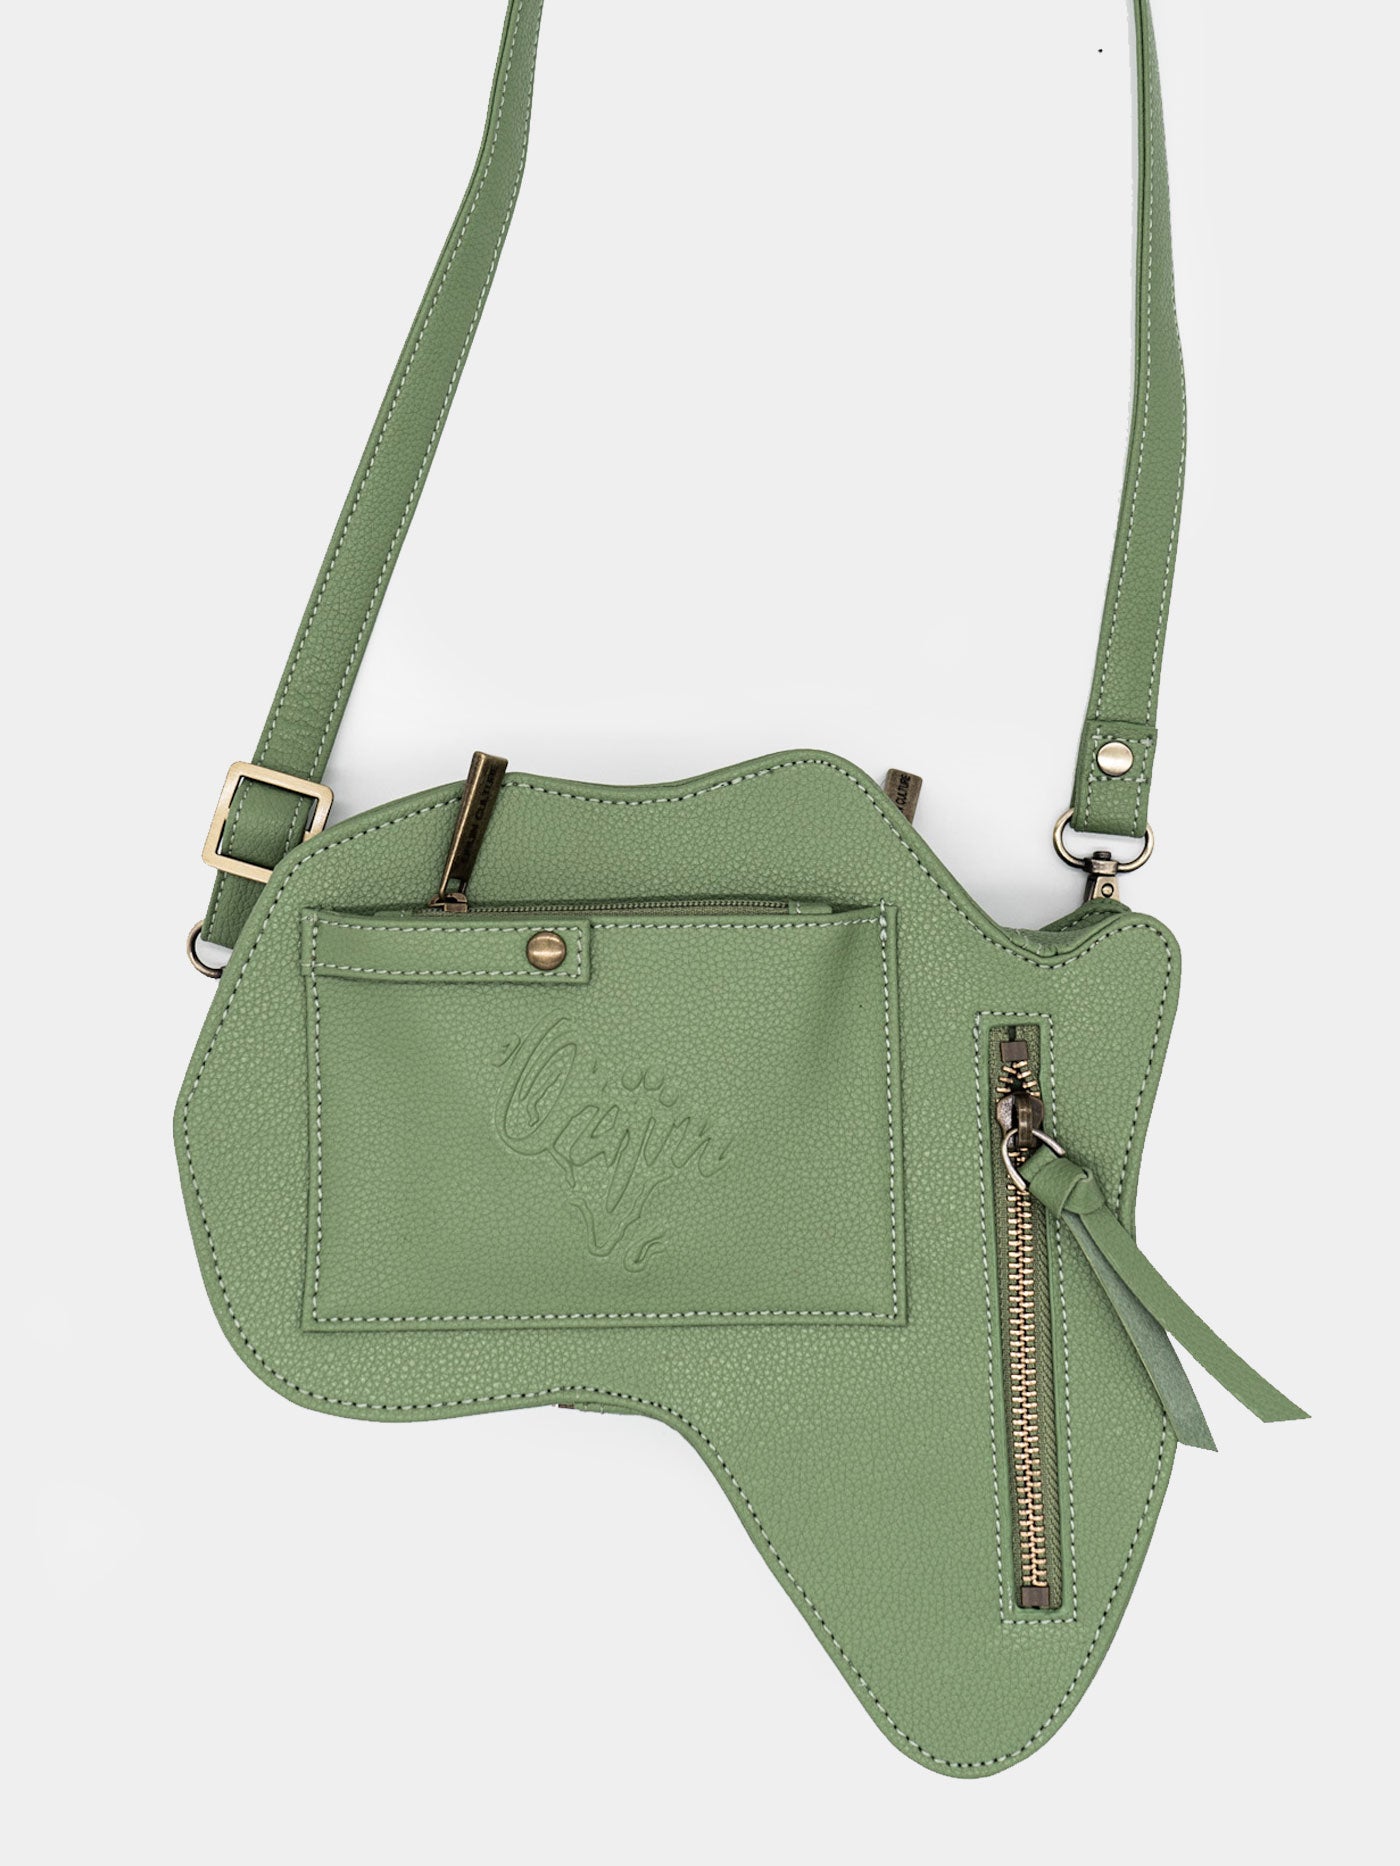 VEGAN Africa Fanny Pack/ CrossBody Bag - Moringa Green Vegan Leather (NEW) - SHOP | Orijin Culture 